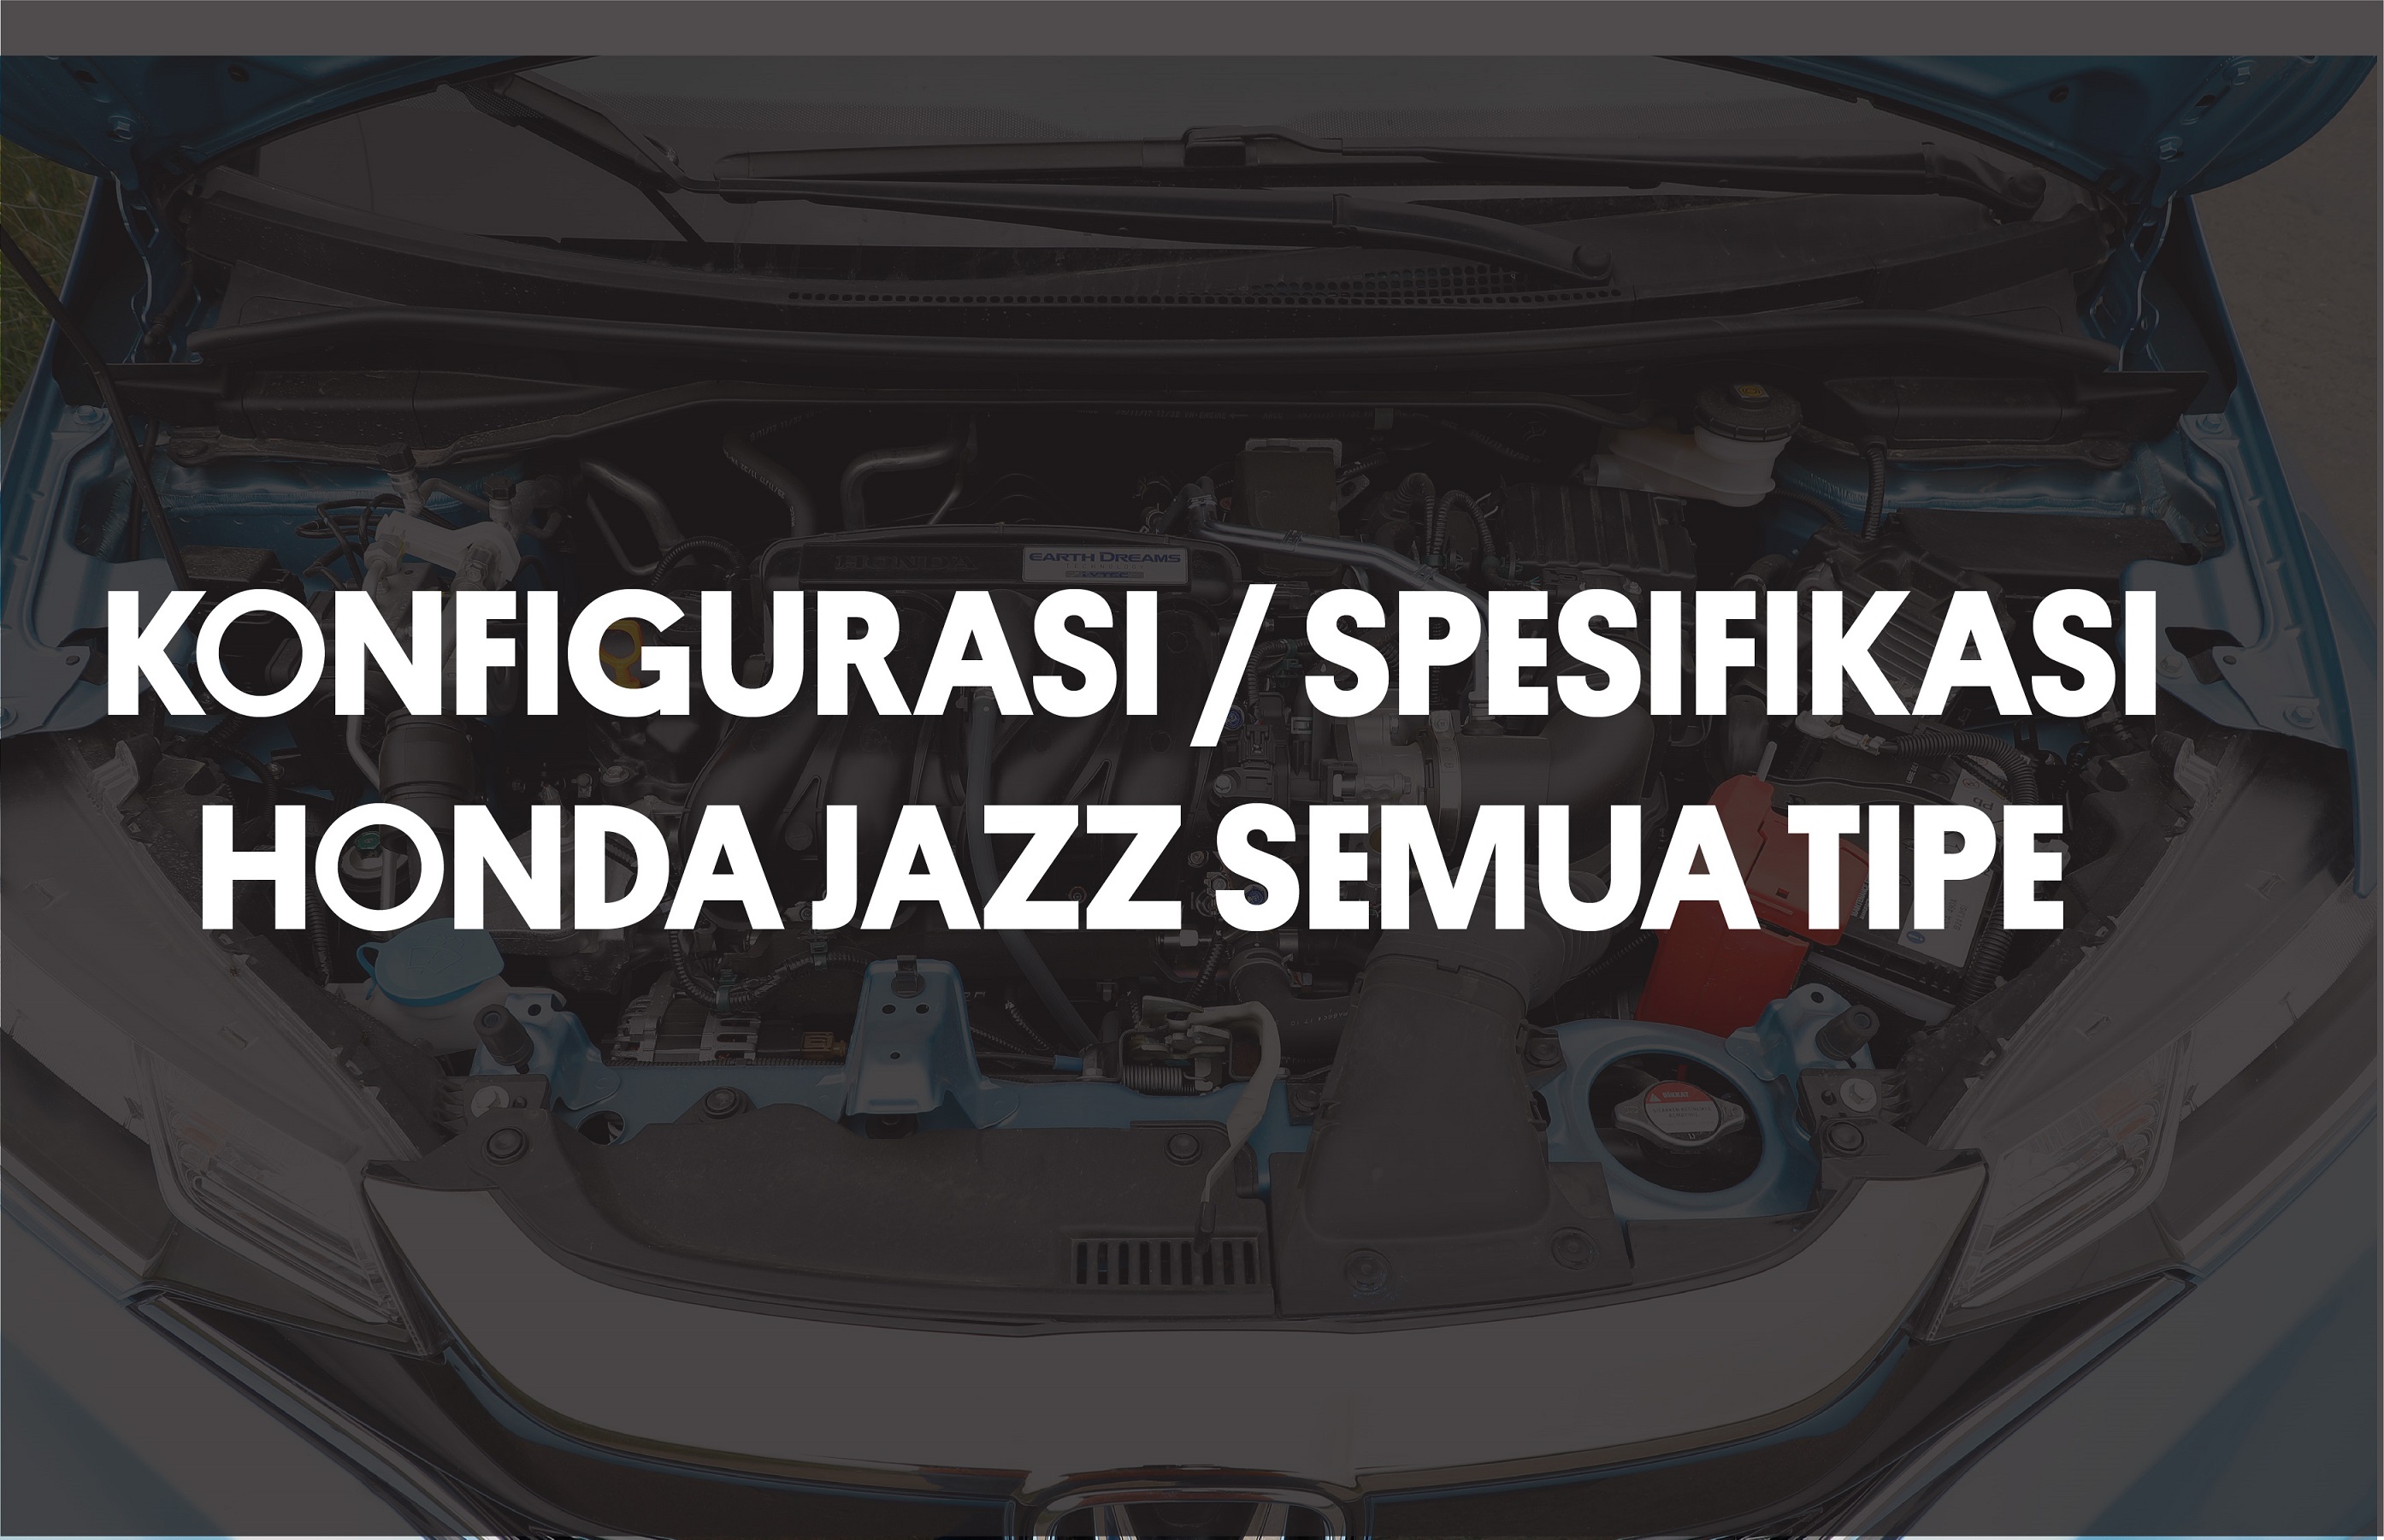 Honda Jazz. (OLX.co.id)